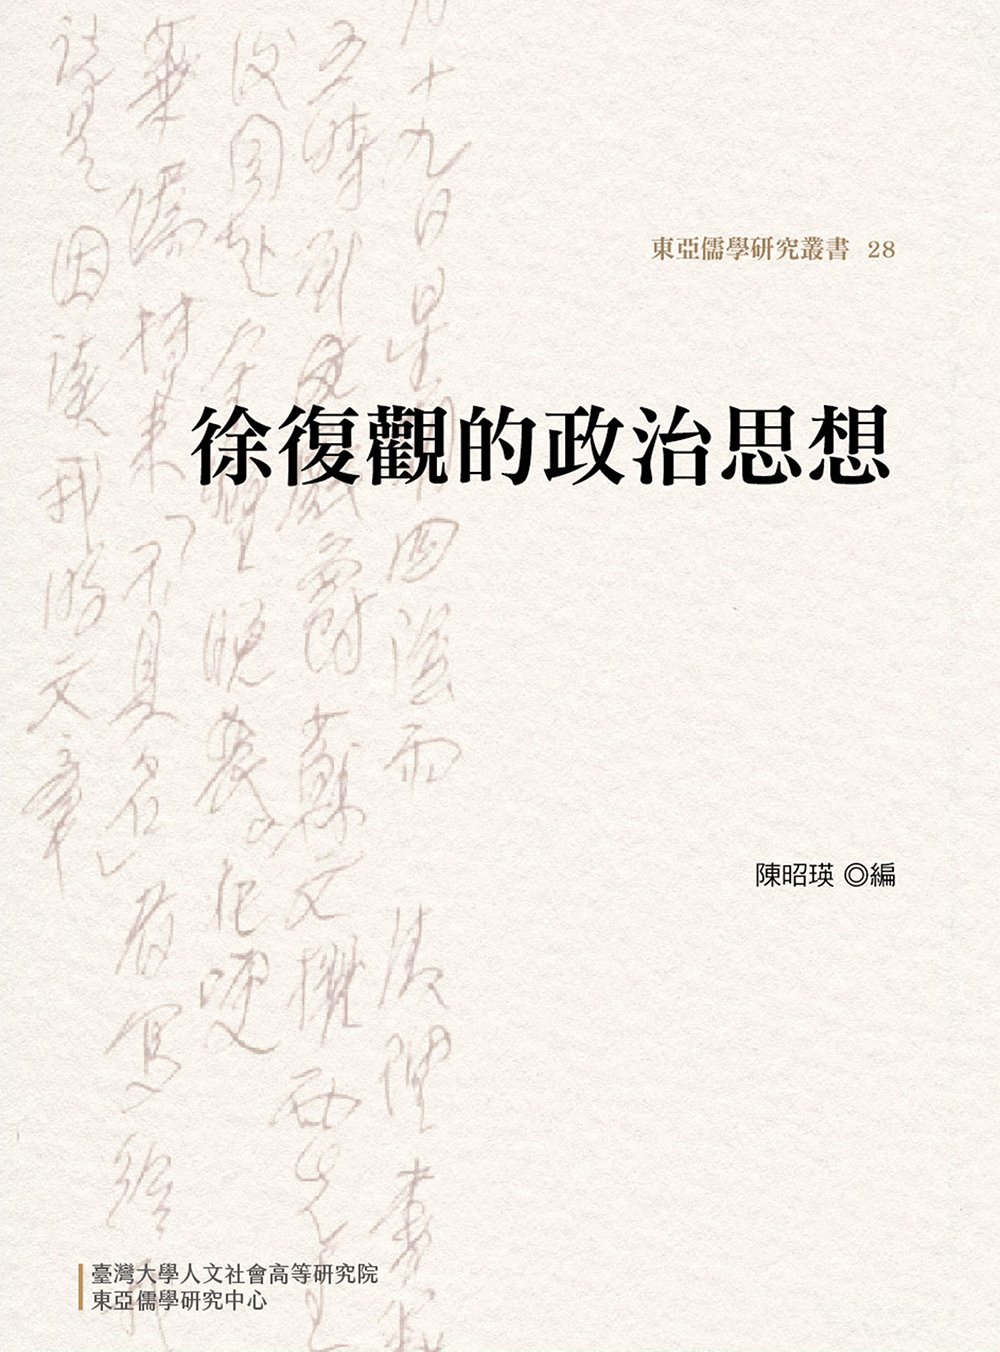 The Political Thought of Xu Fuguan